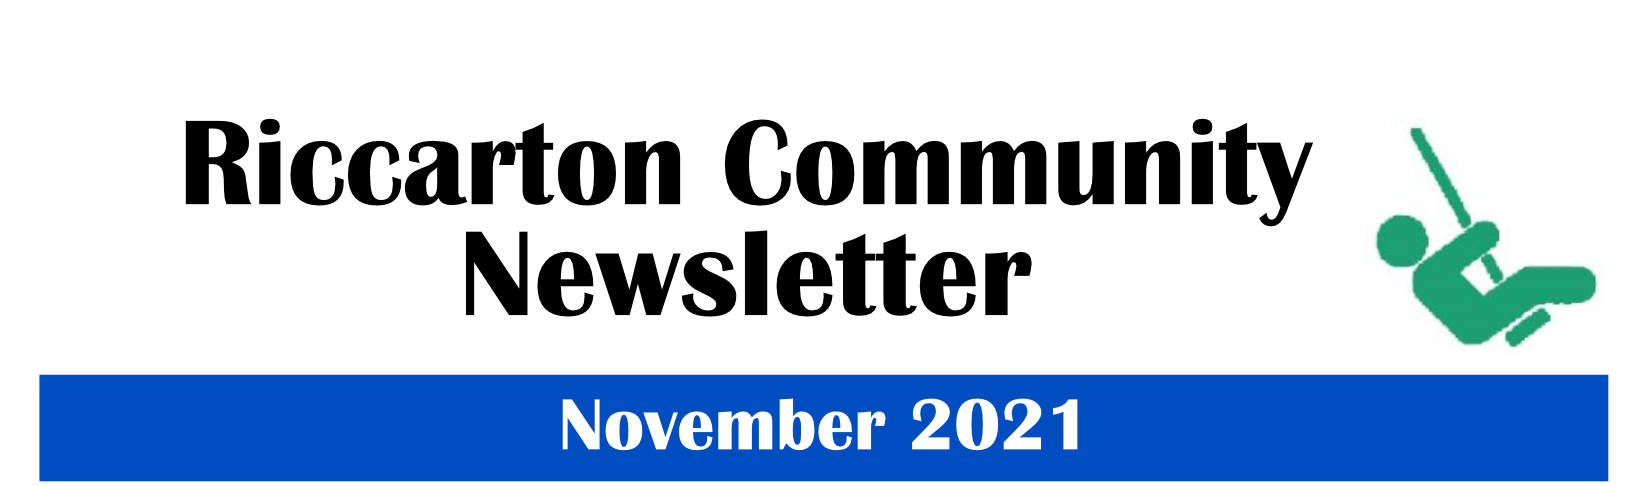 RC Newsletter Nov 2021masthead